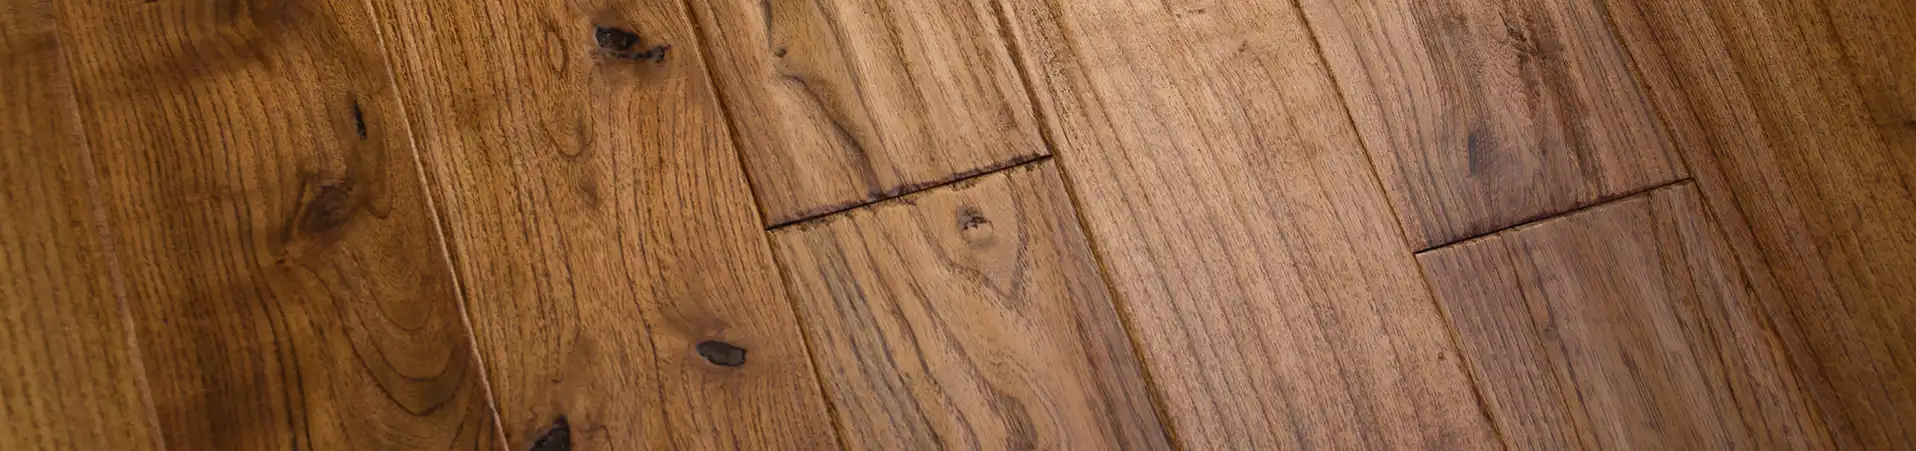 Sand-less Floor Refinishing | N-Hance Wood Refinishing of Seattle